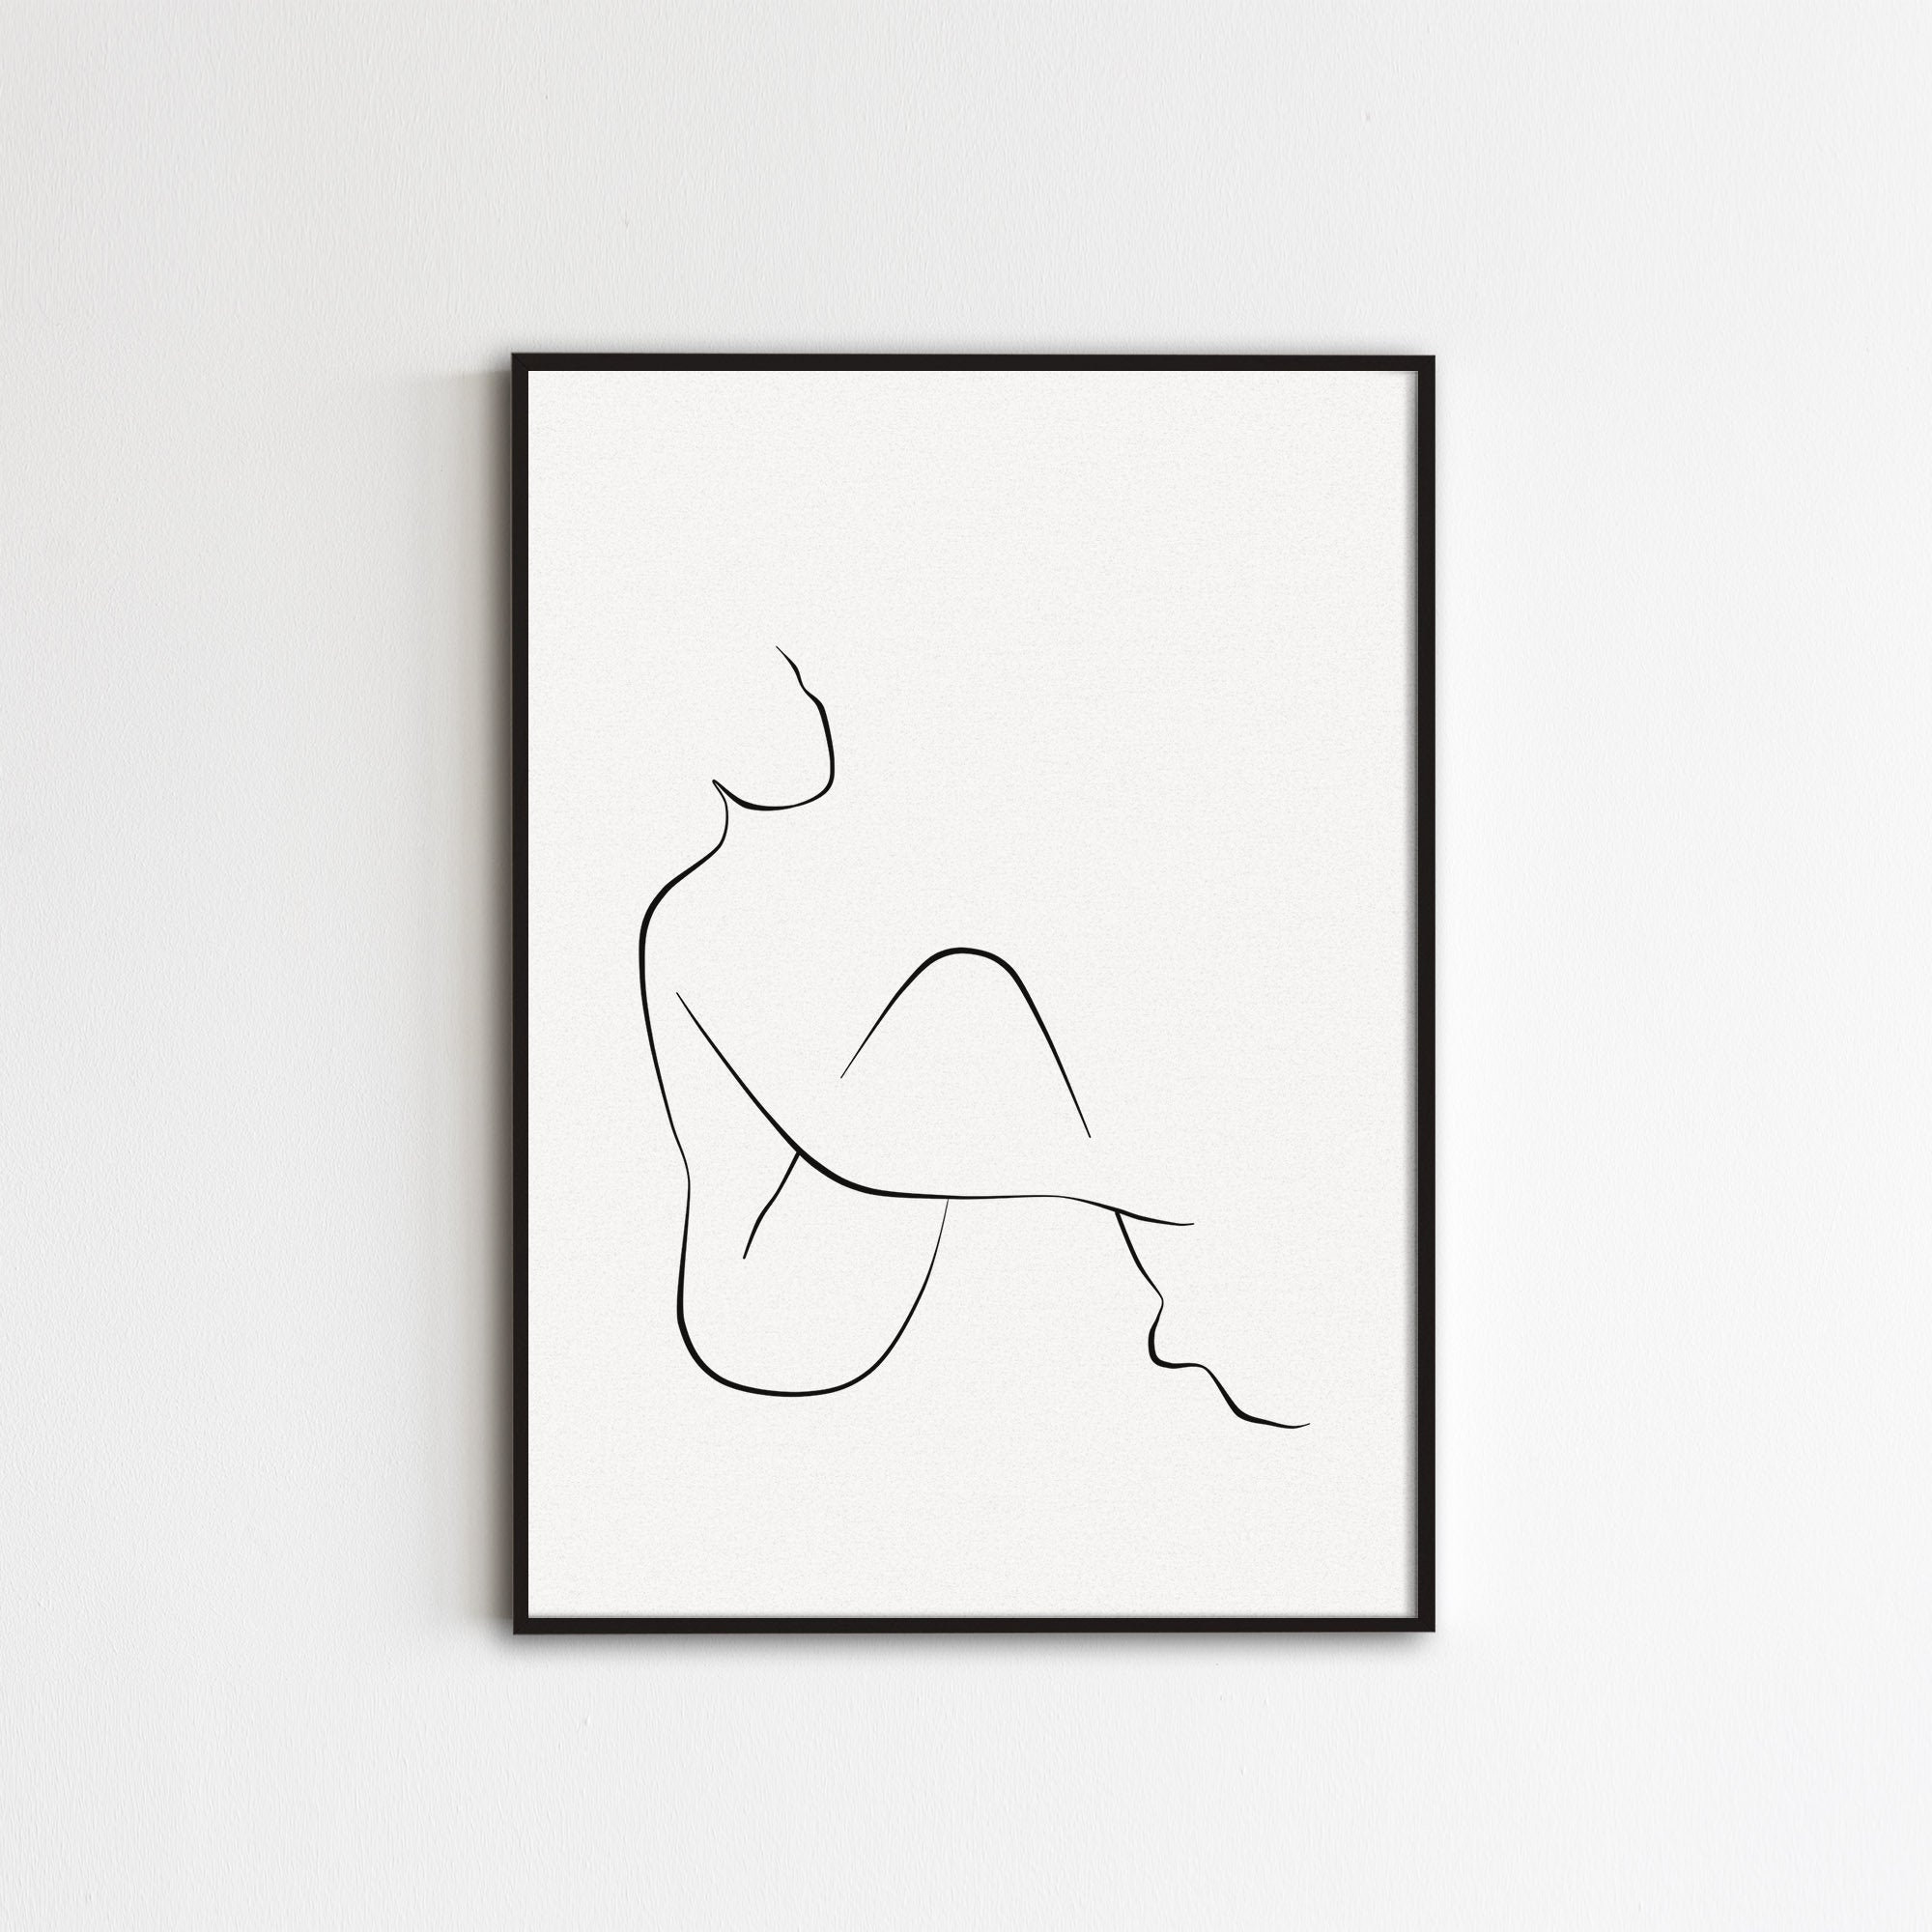 FRAMED Hessian Woman Line Art Female Figure Abstract Woman Body Wall Design 